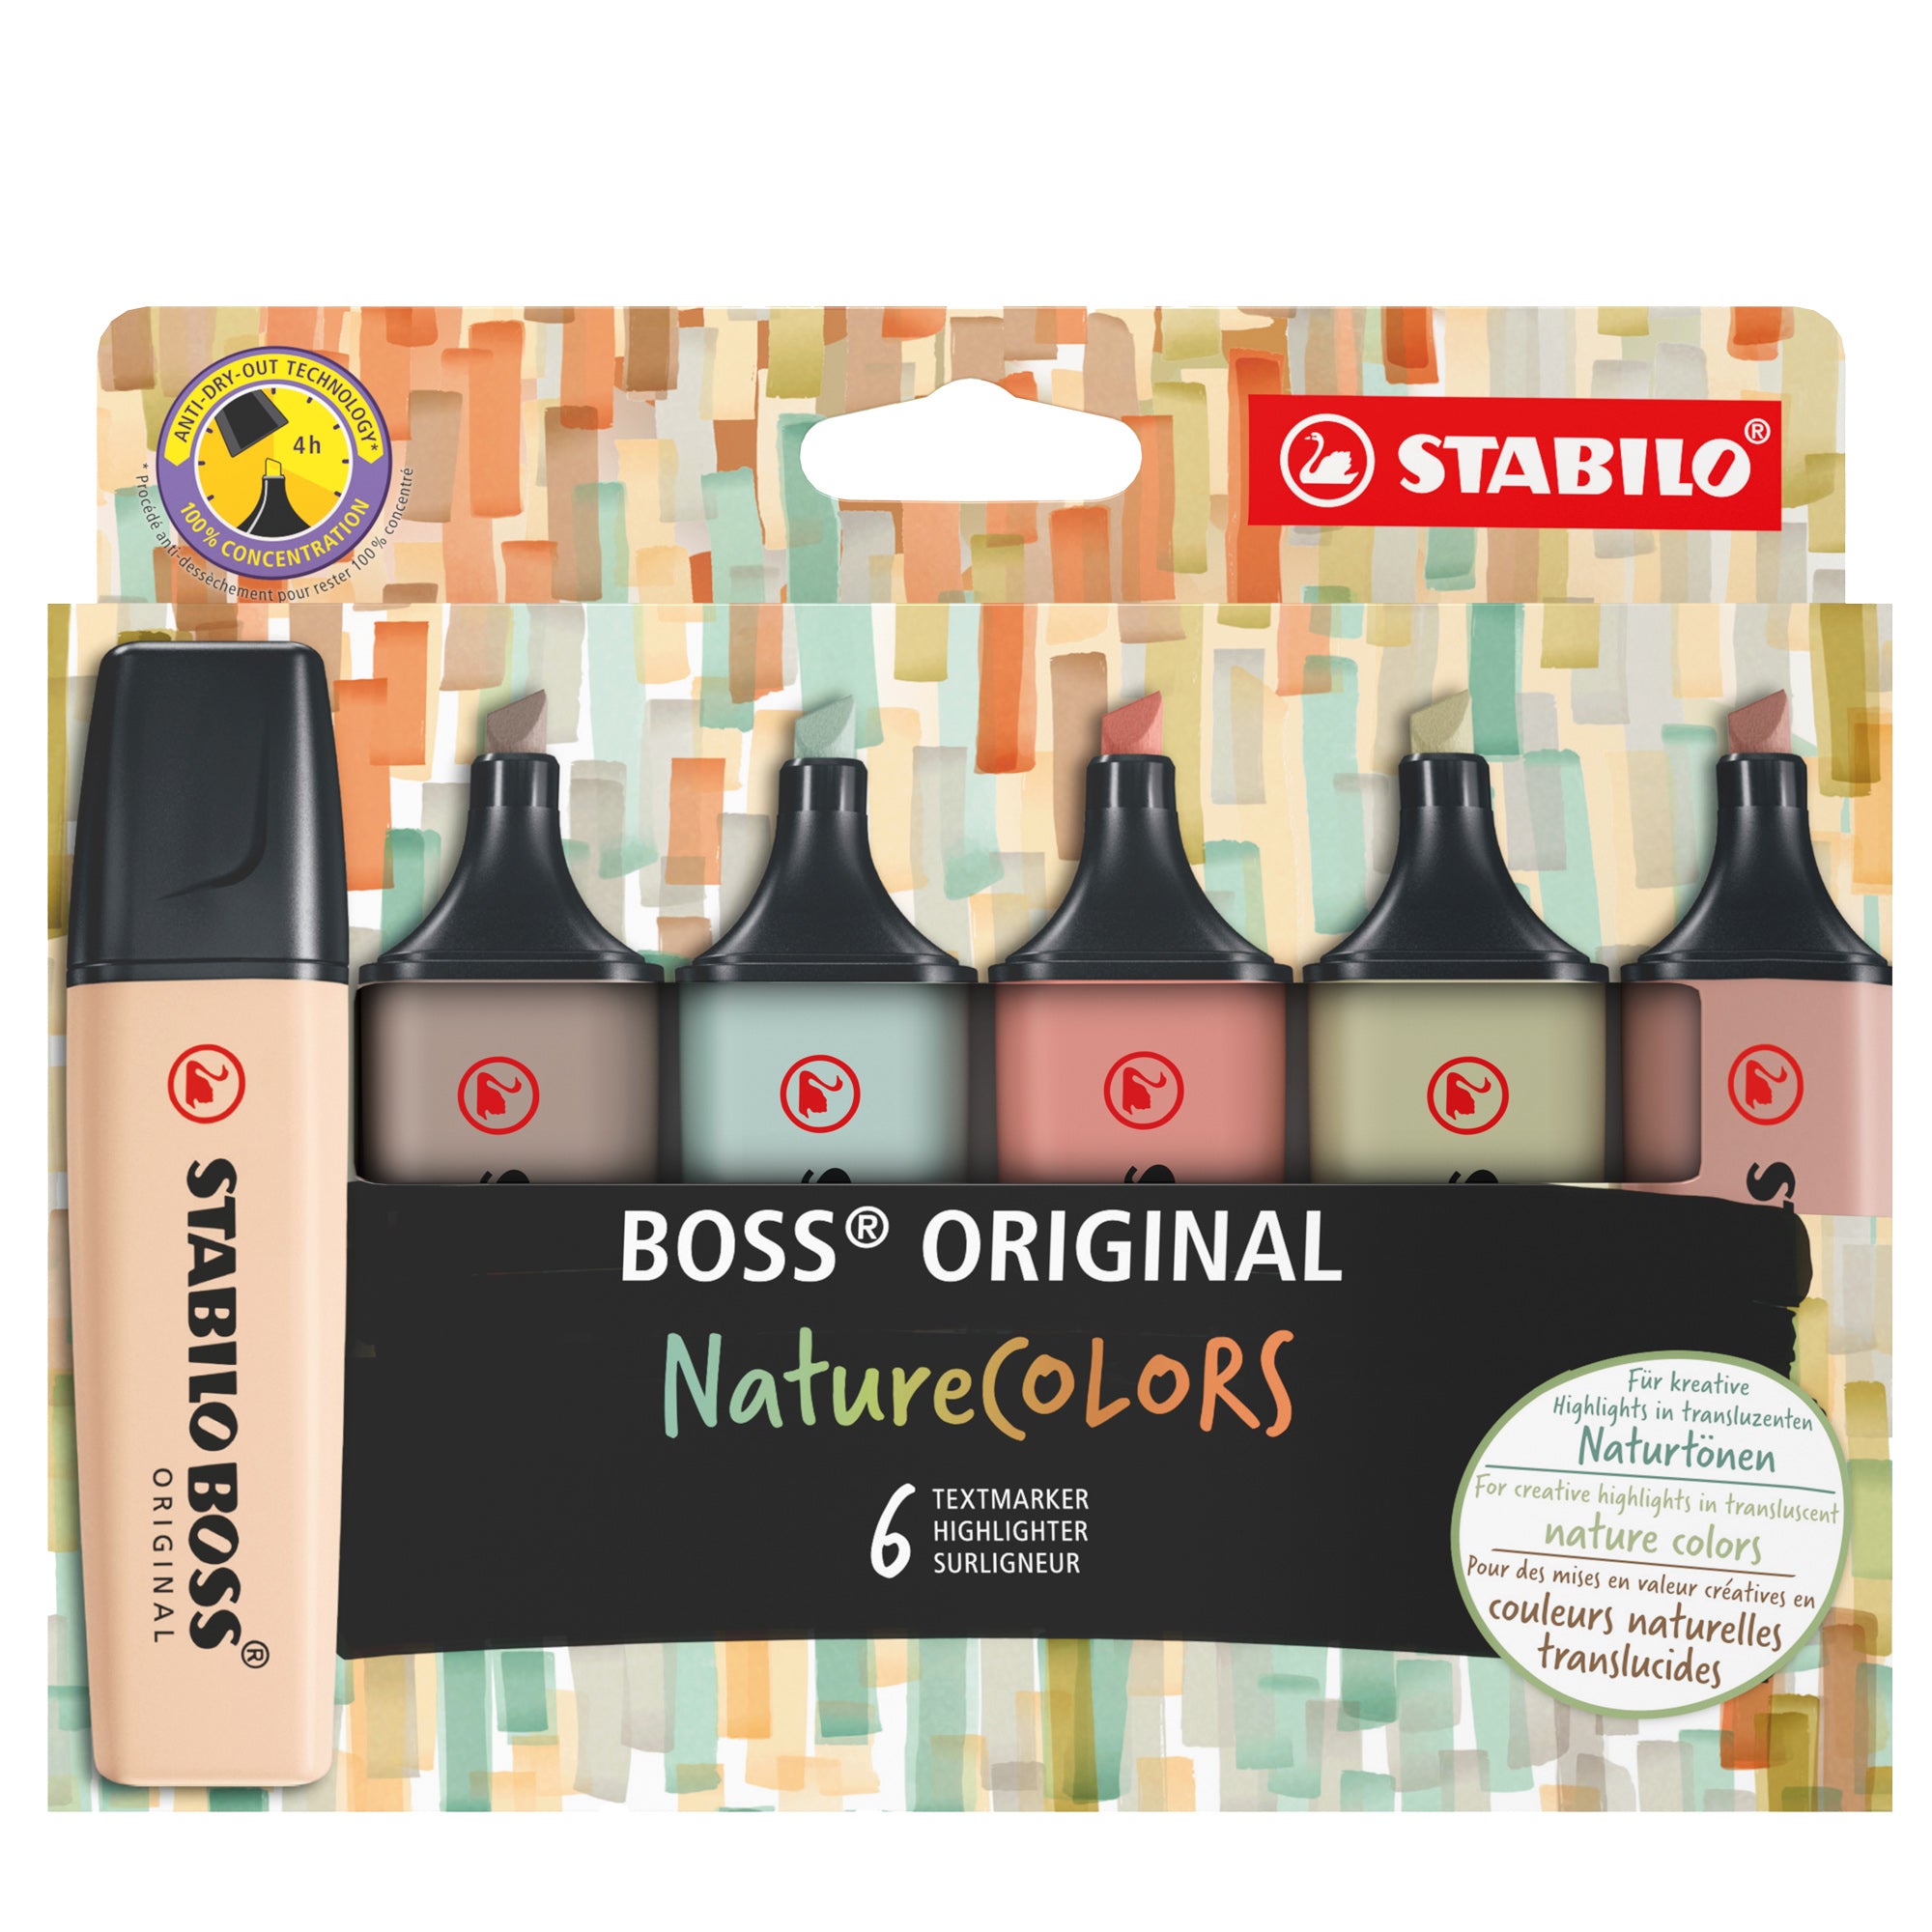 stabilo-astuccio-6-evidenziatori-boss-naturecolors